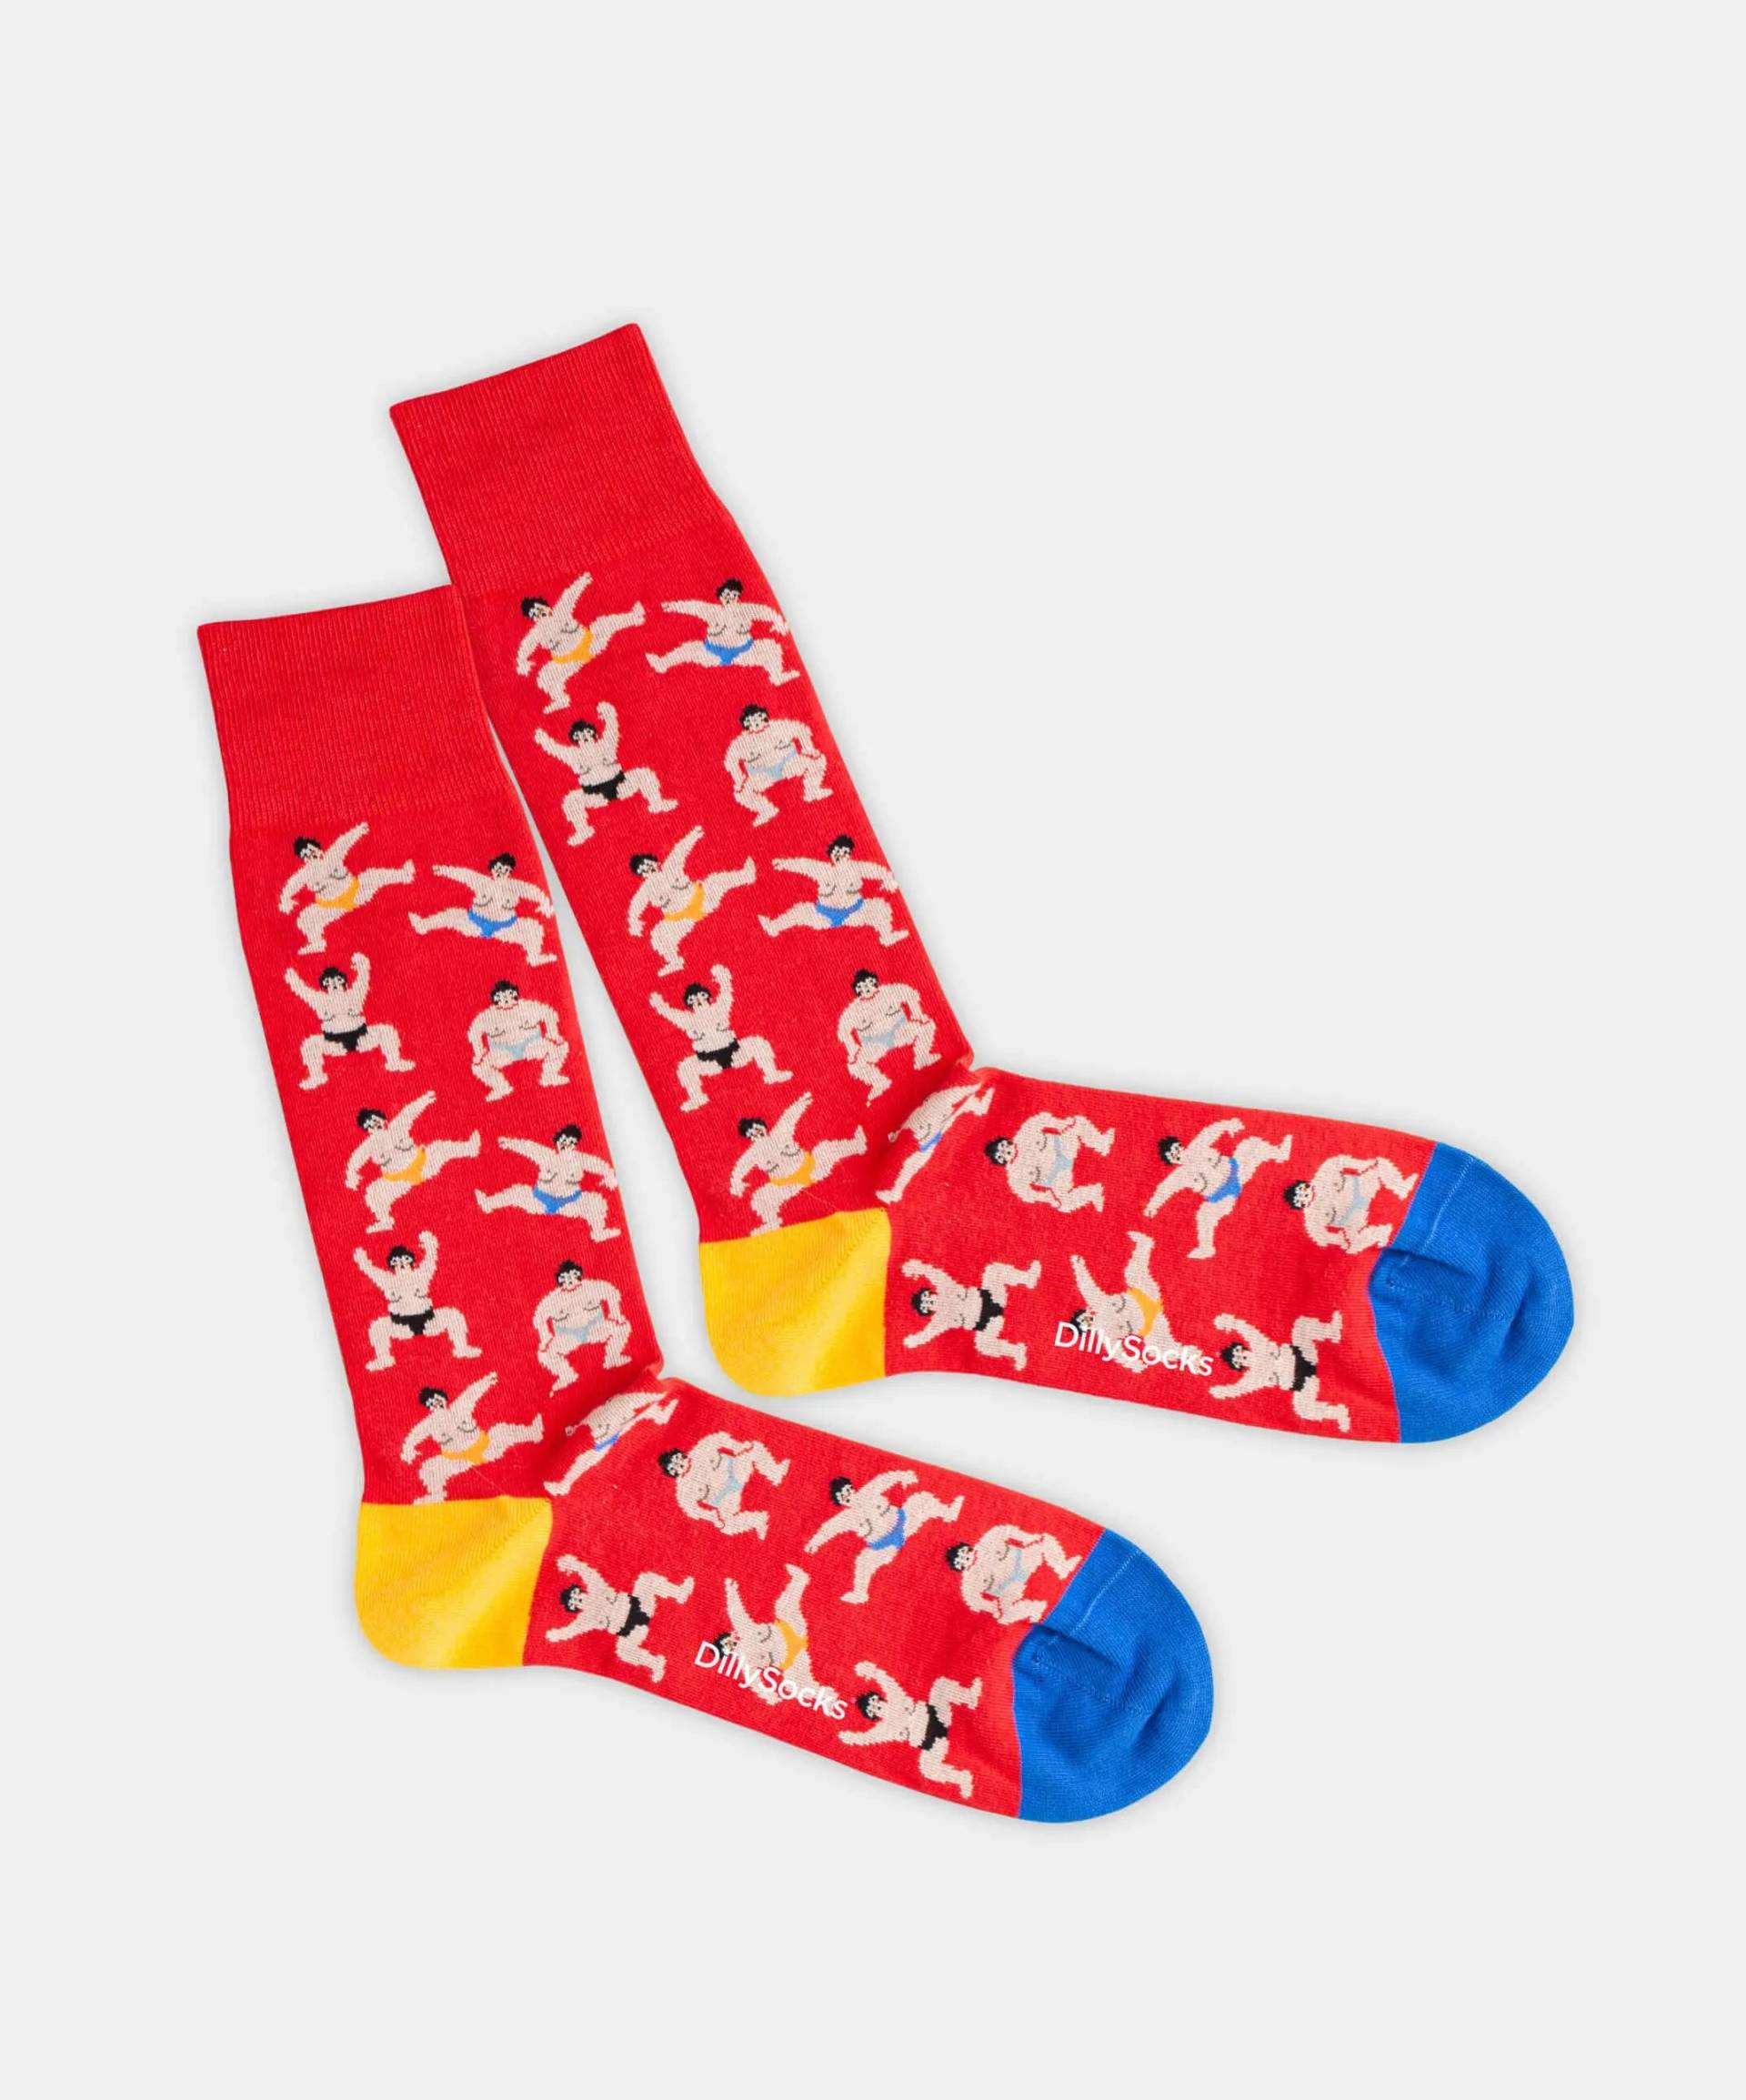 - Socken in Rot mit Sport Motiv/Muster von DillySocks